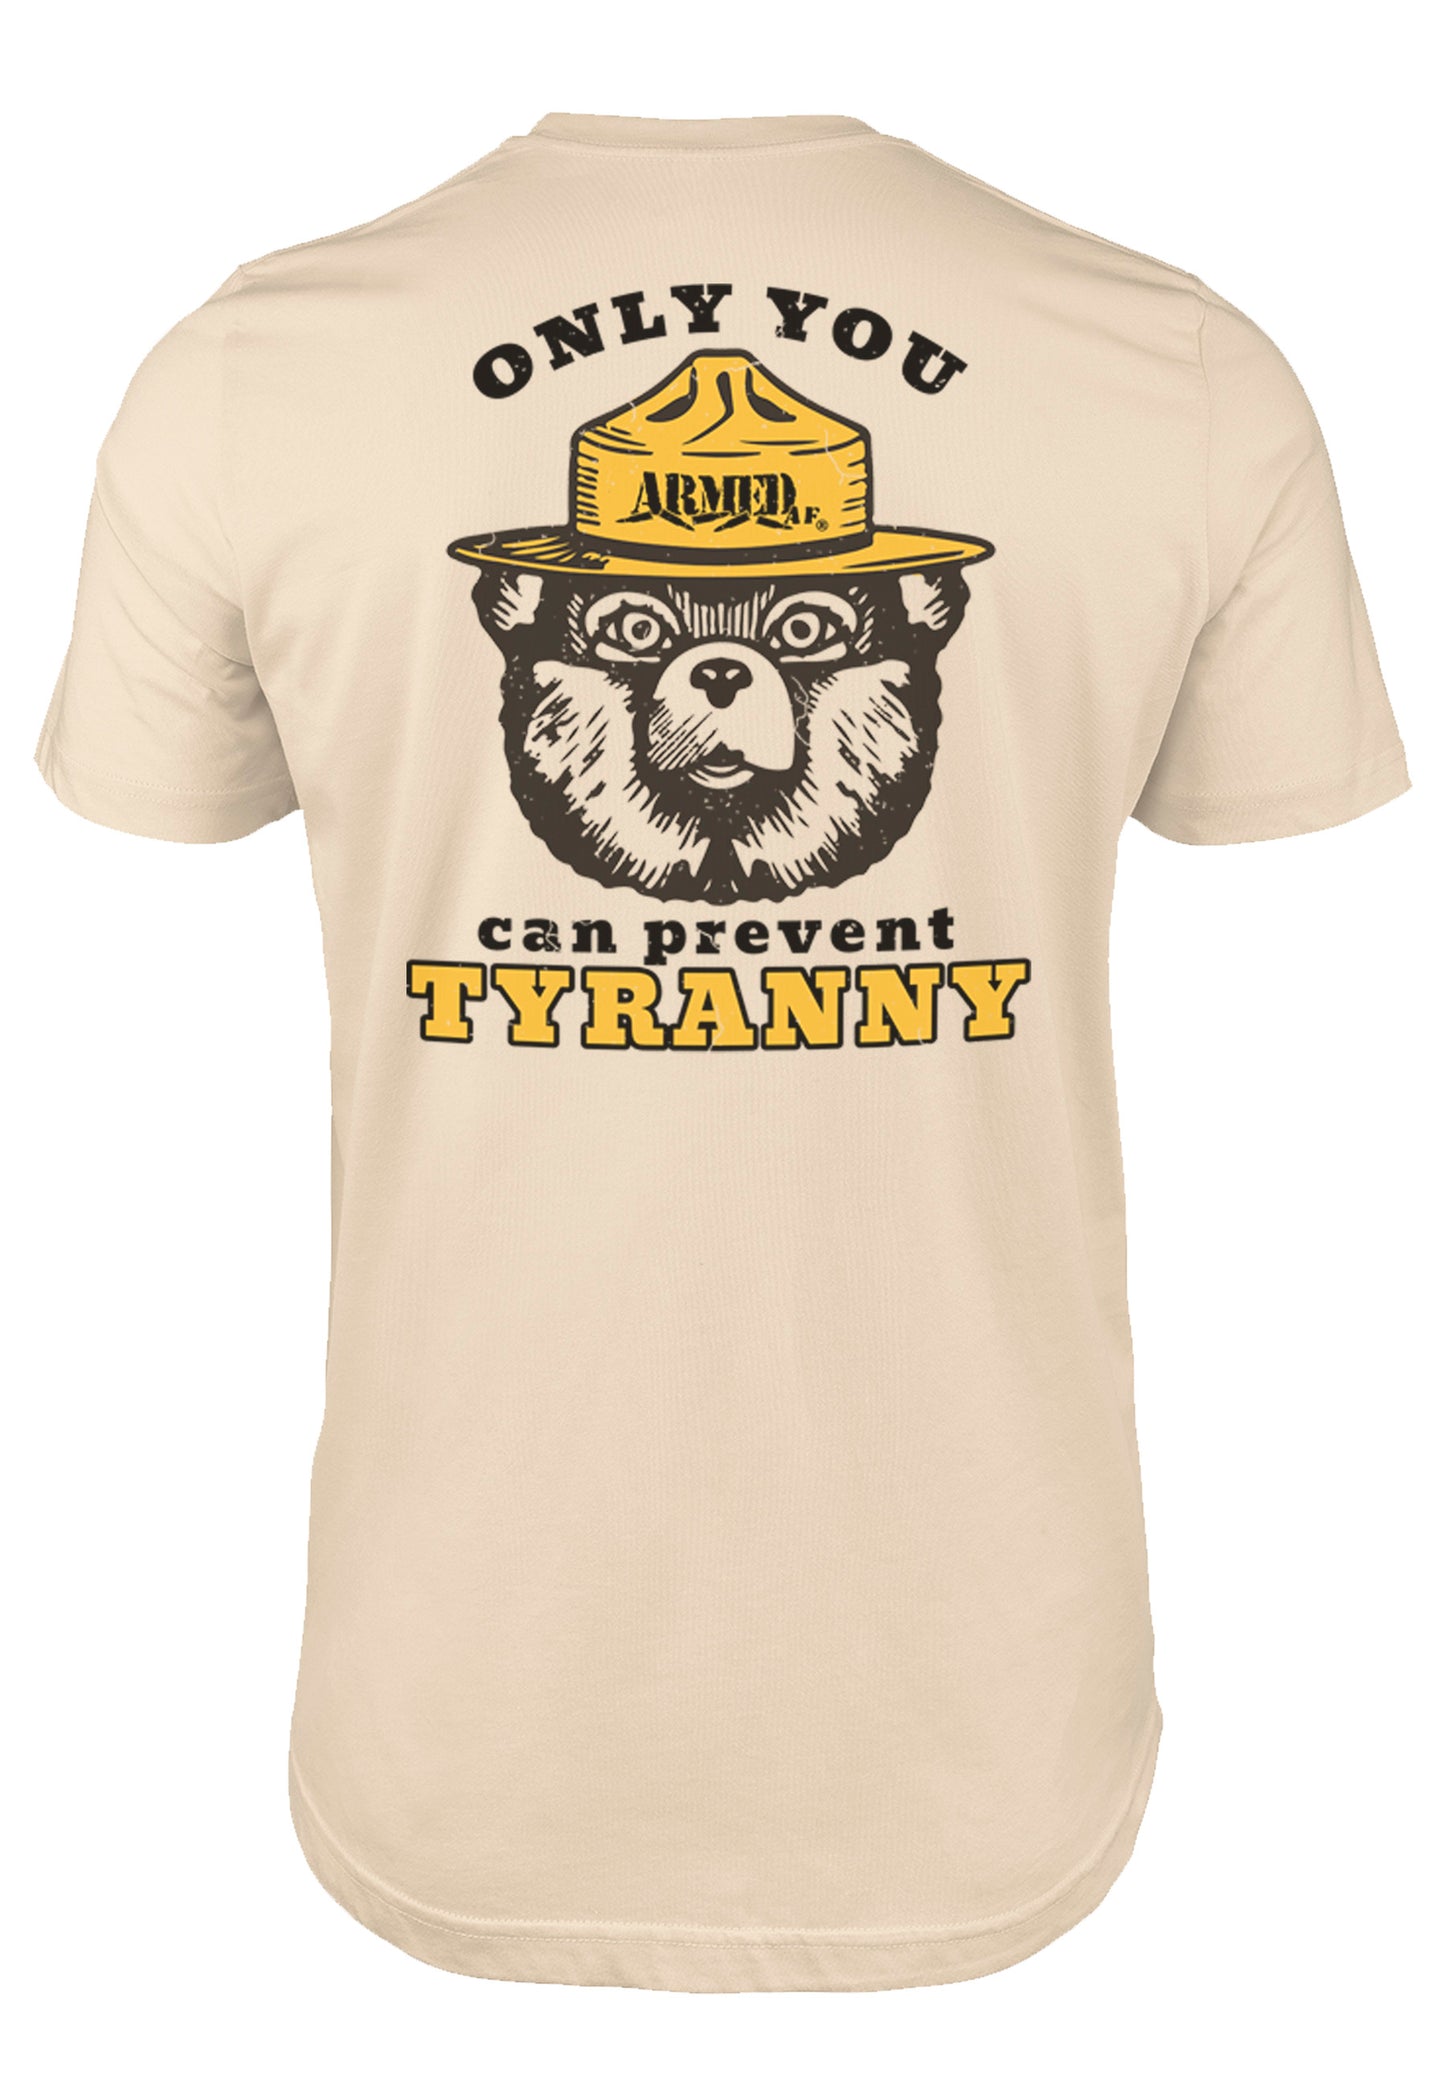 SMokey Bear tyranny t-shirt design on back of shirt